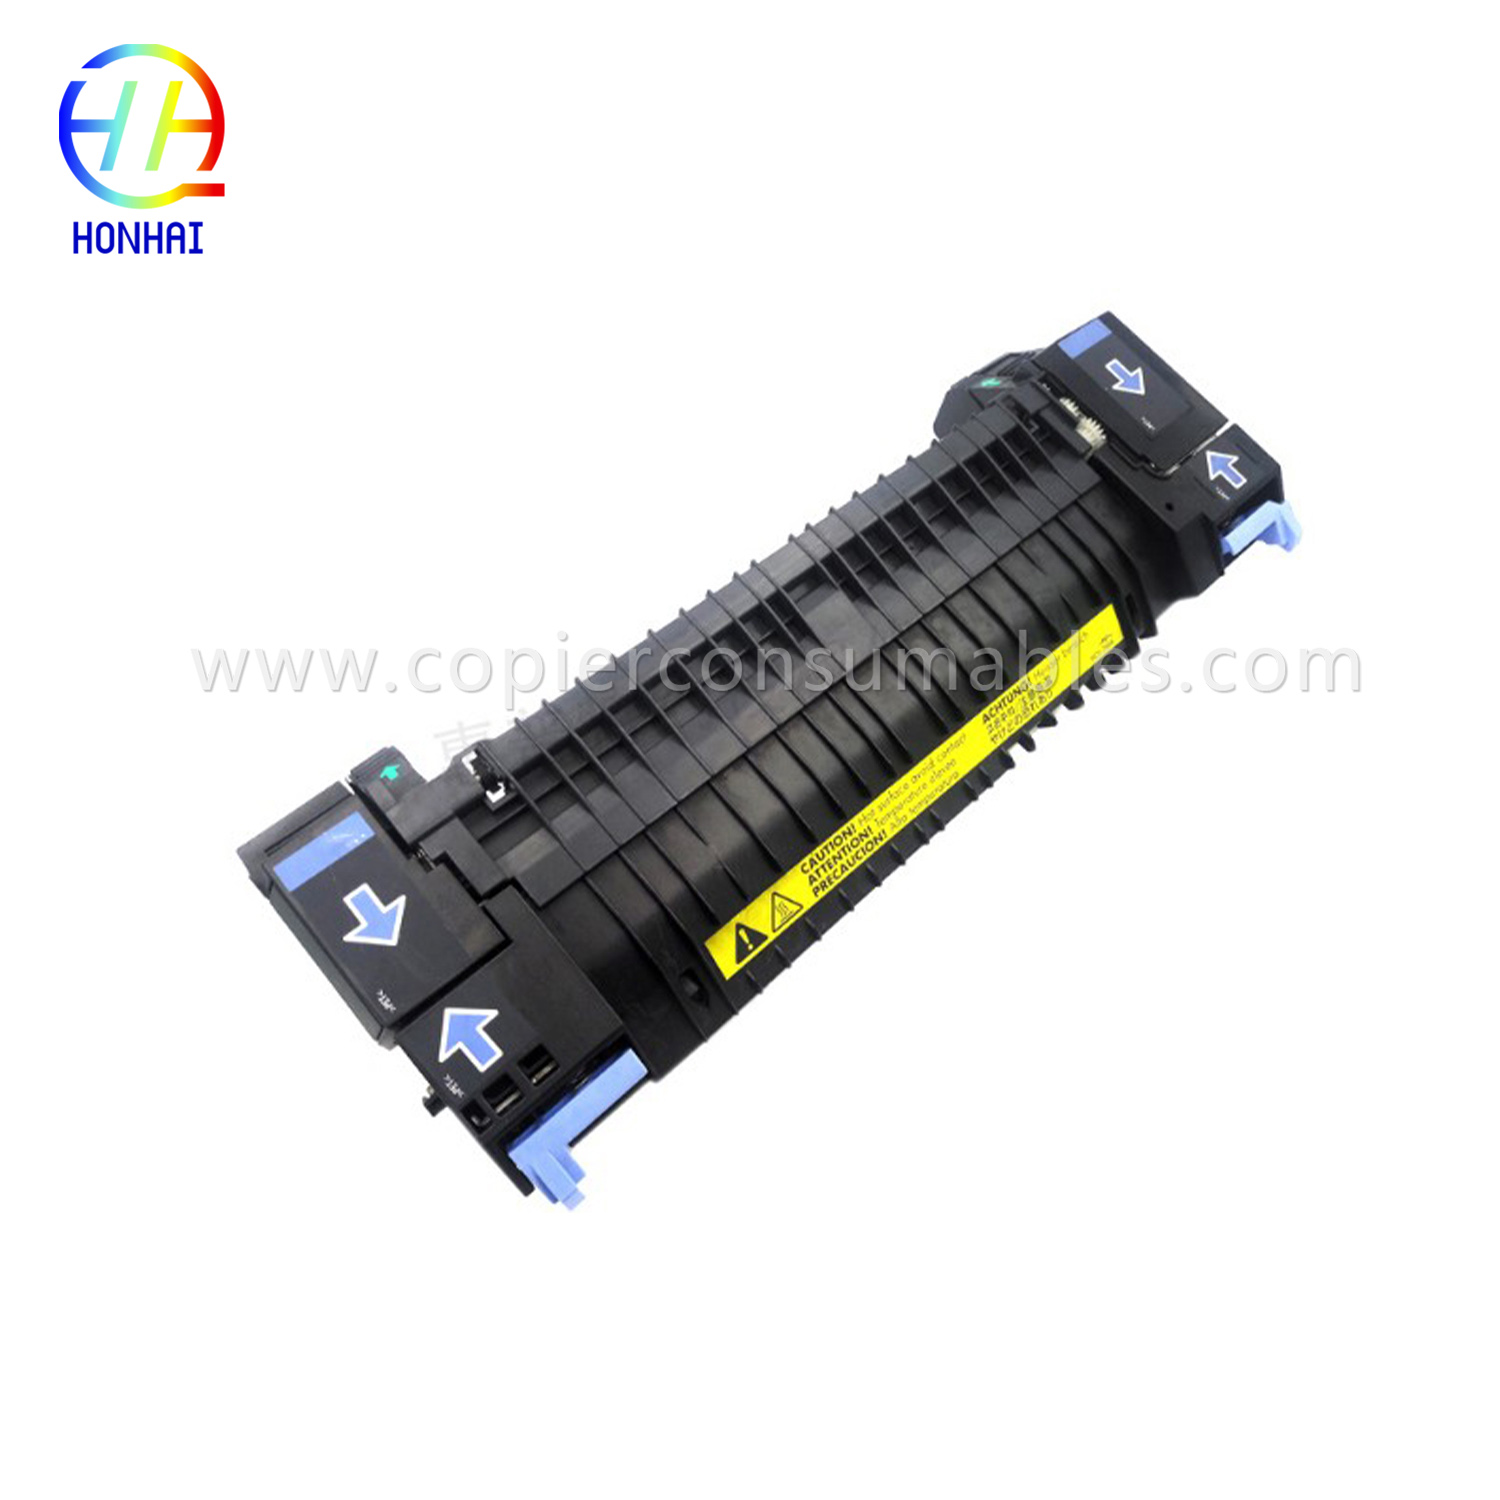 Фьюзер для HP Color LaserJet 2700 3000 3600 3800 CP3505 RM1-4348 RM1-2763 RM1-2665